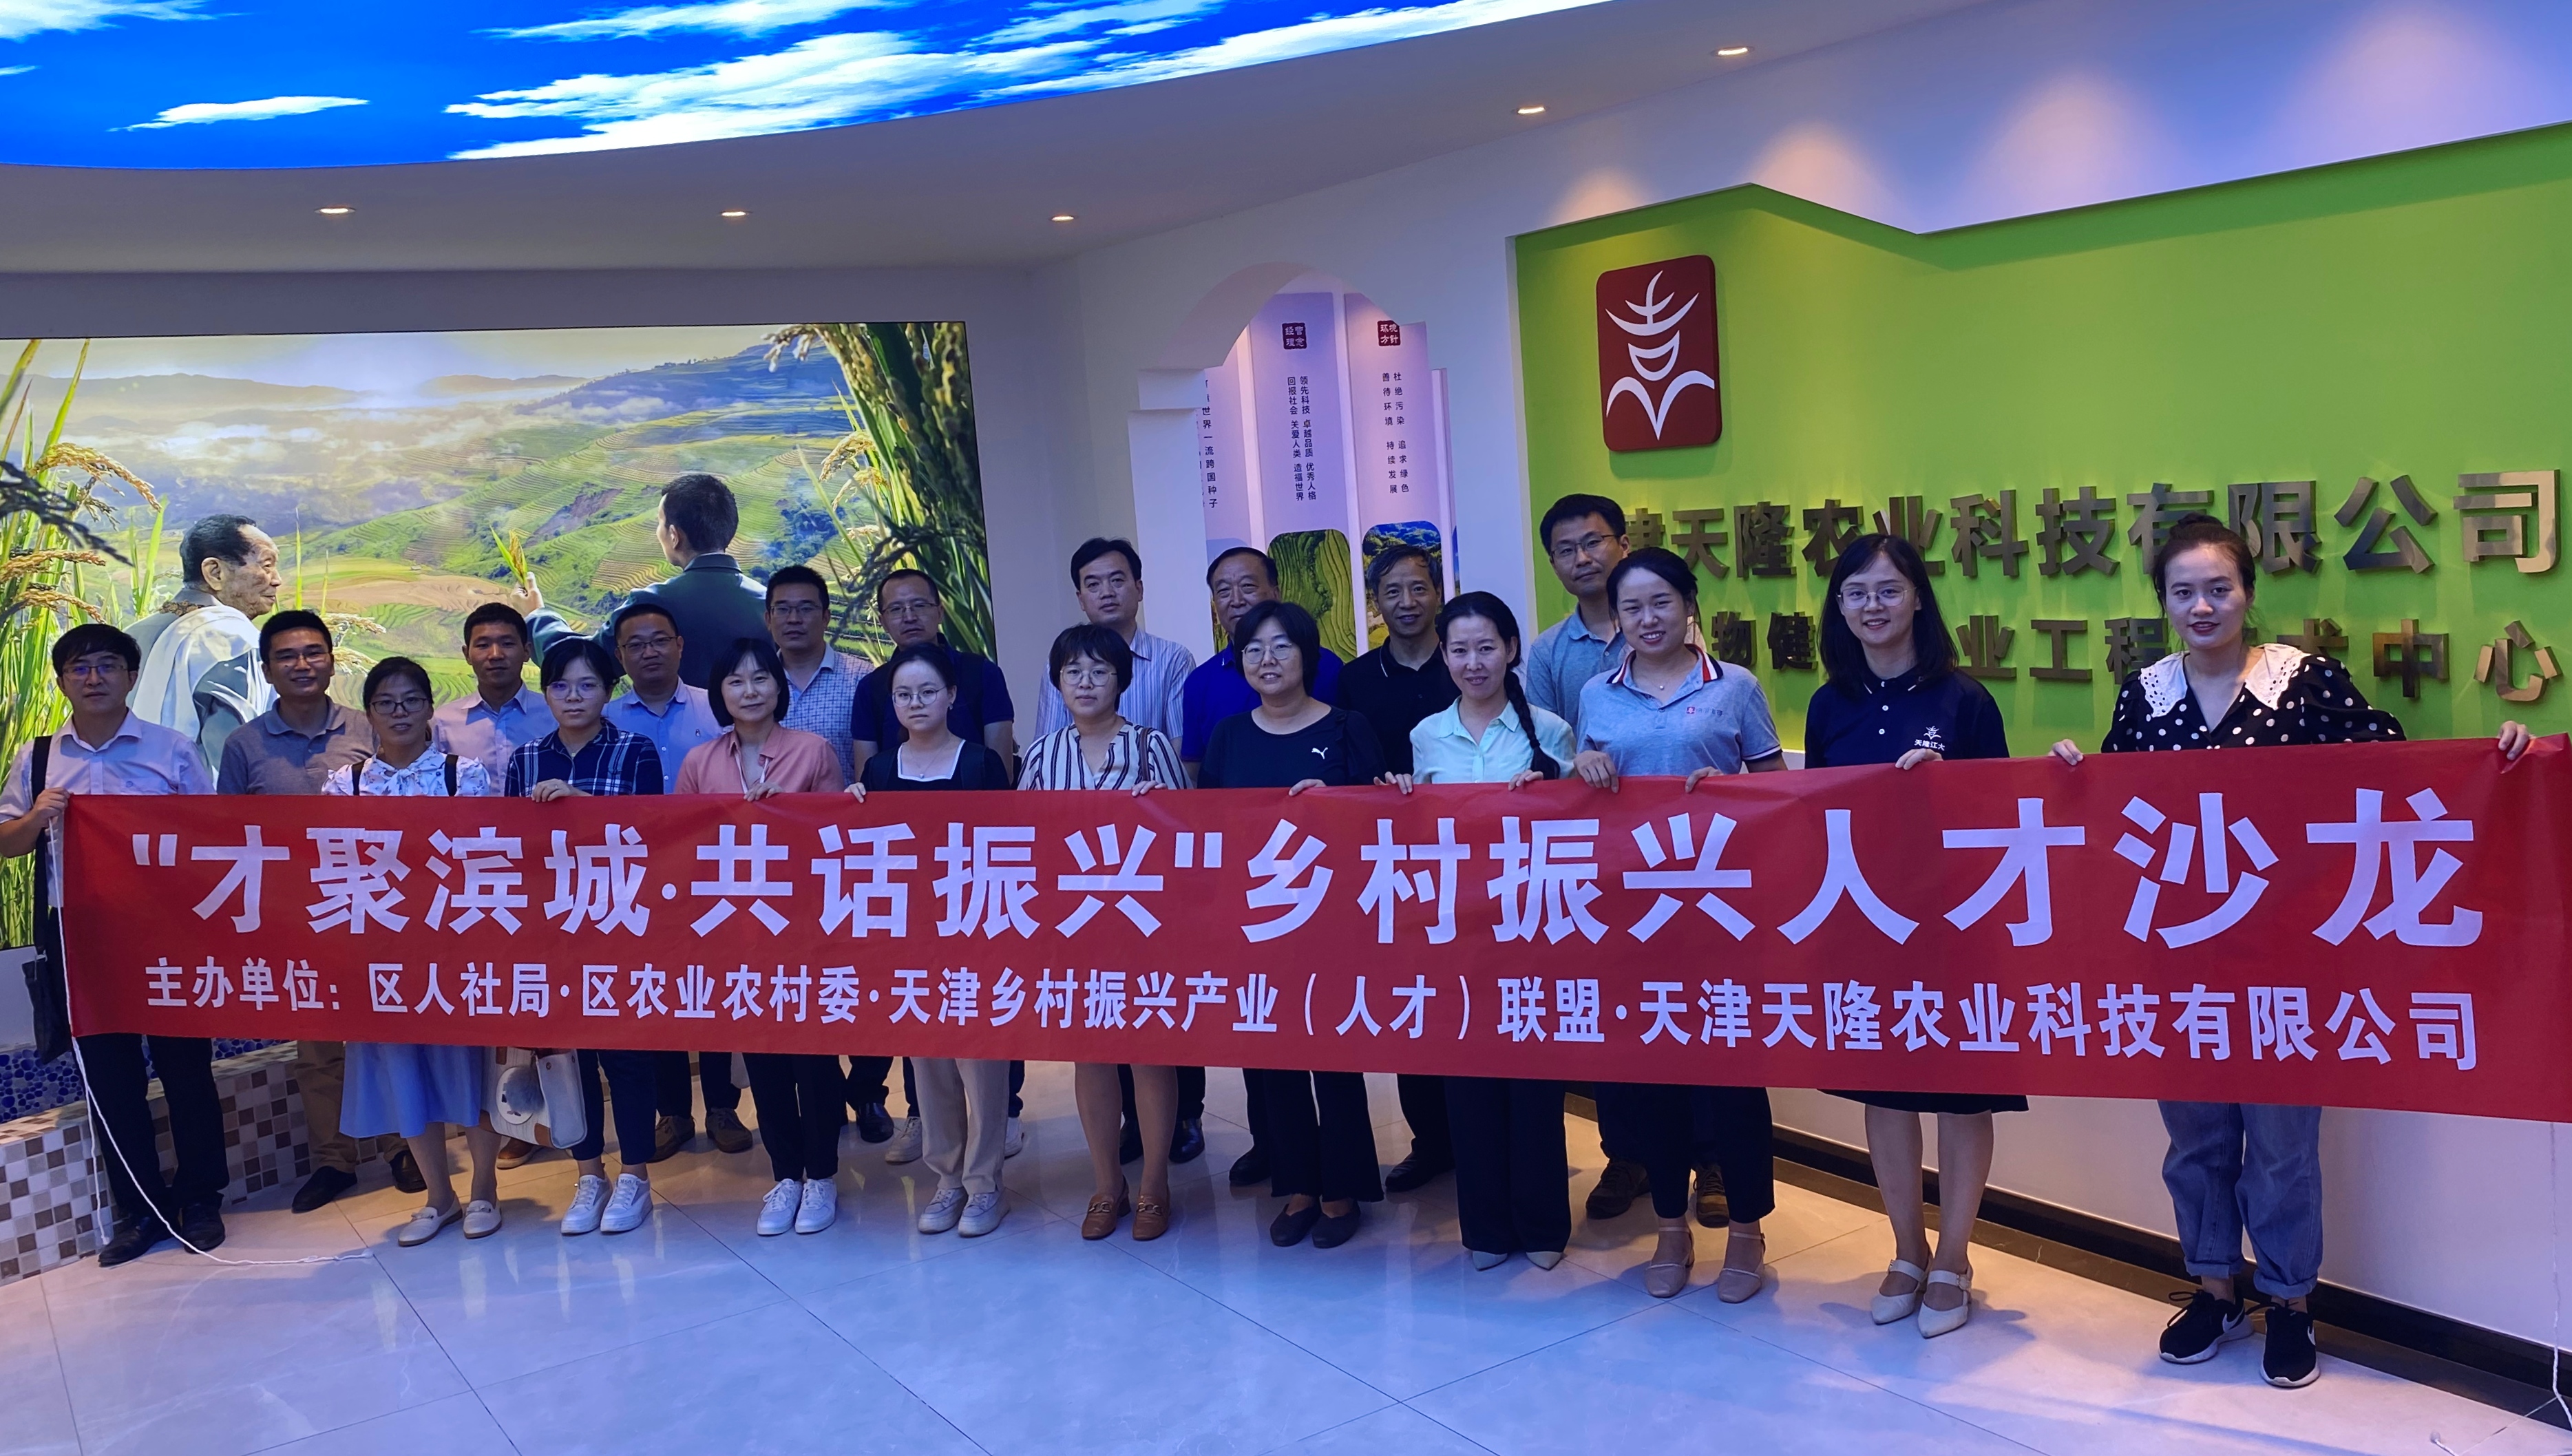 Tianlong hosted the first rural revitalization talent salon in Binhai